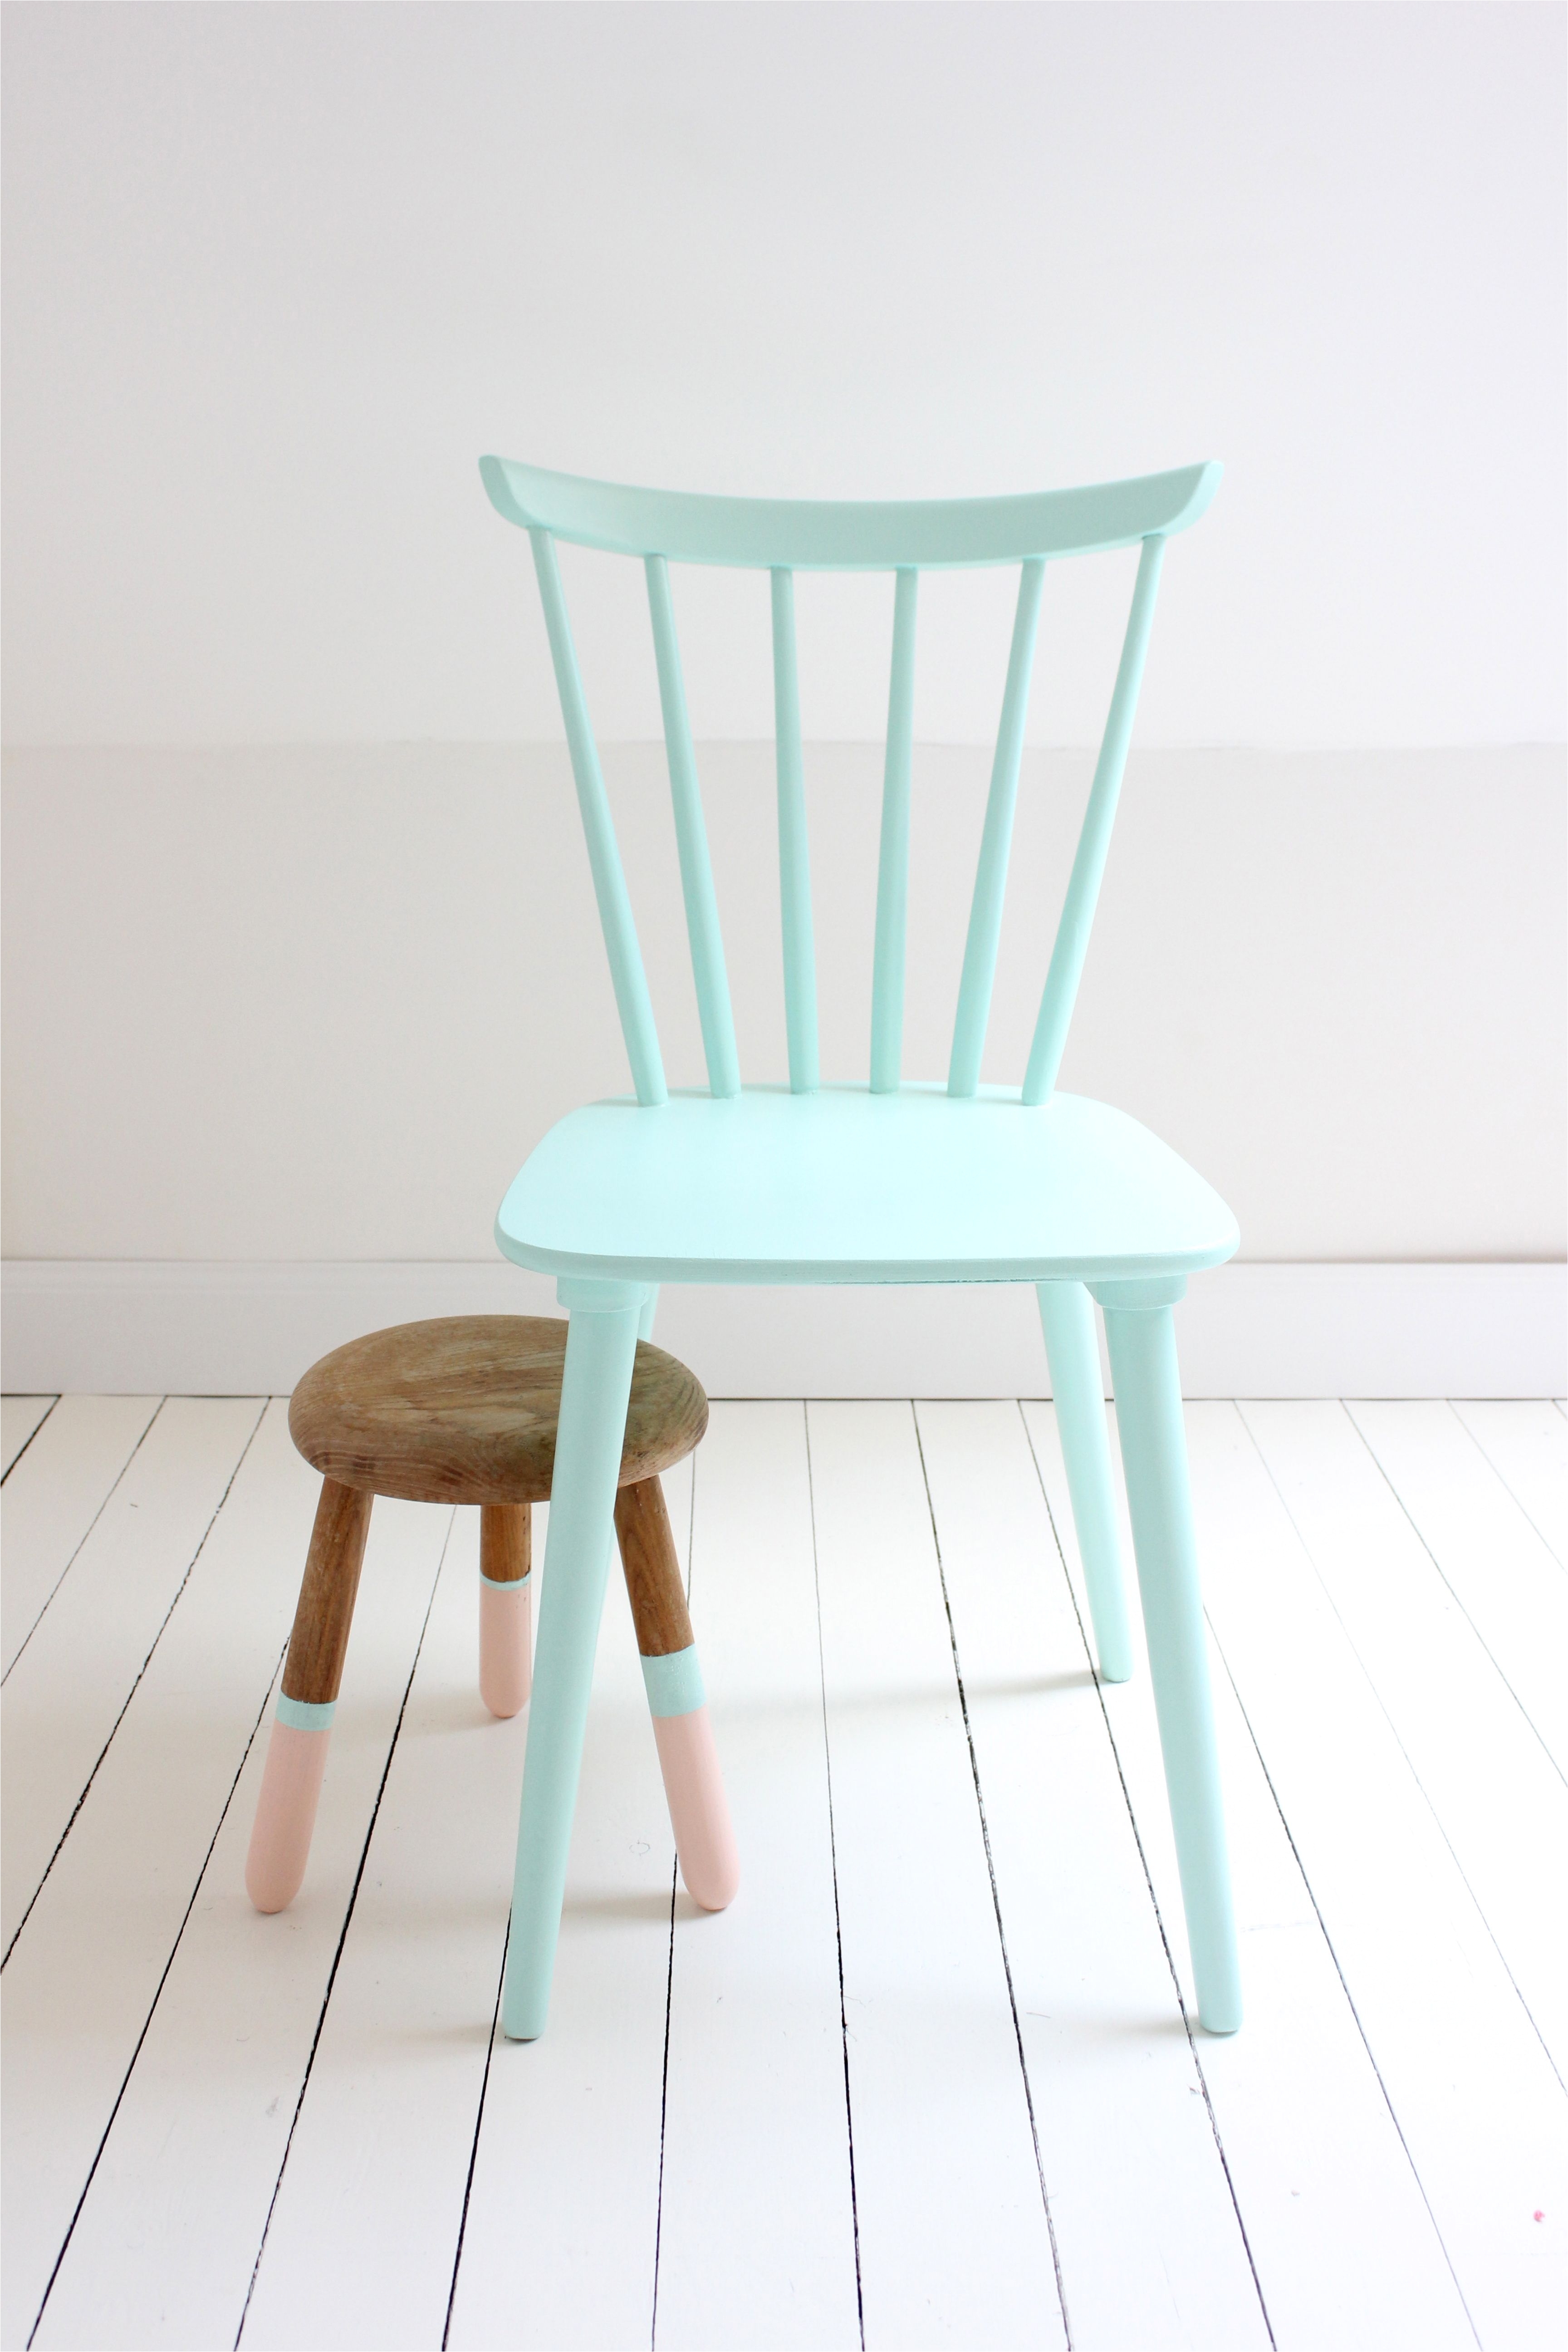 B Q Paint for Plastic Chairs Painted Furniture Ideas Pinterest Pastels Vintage and Vintage